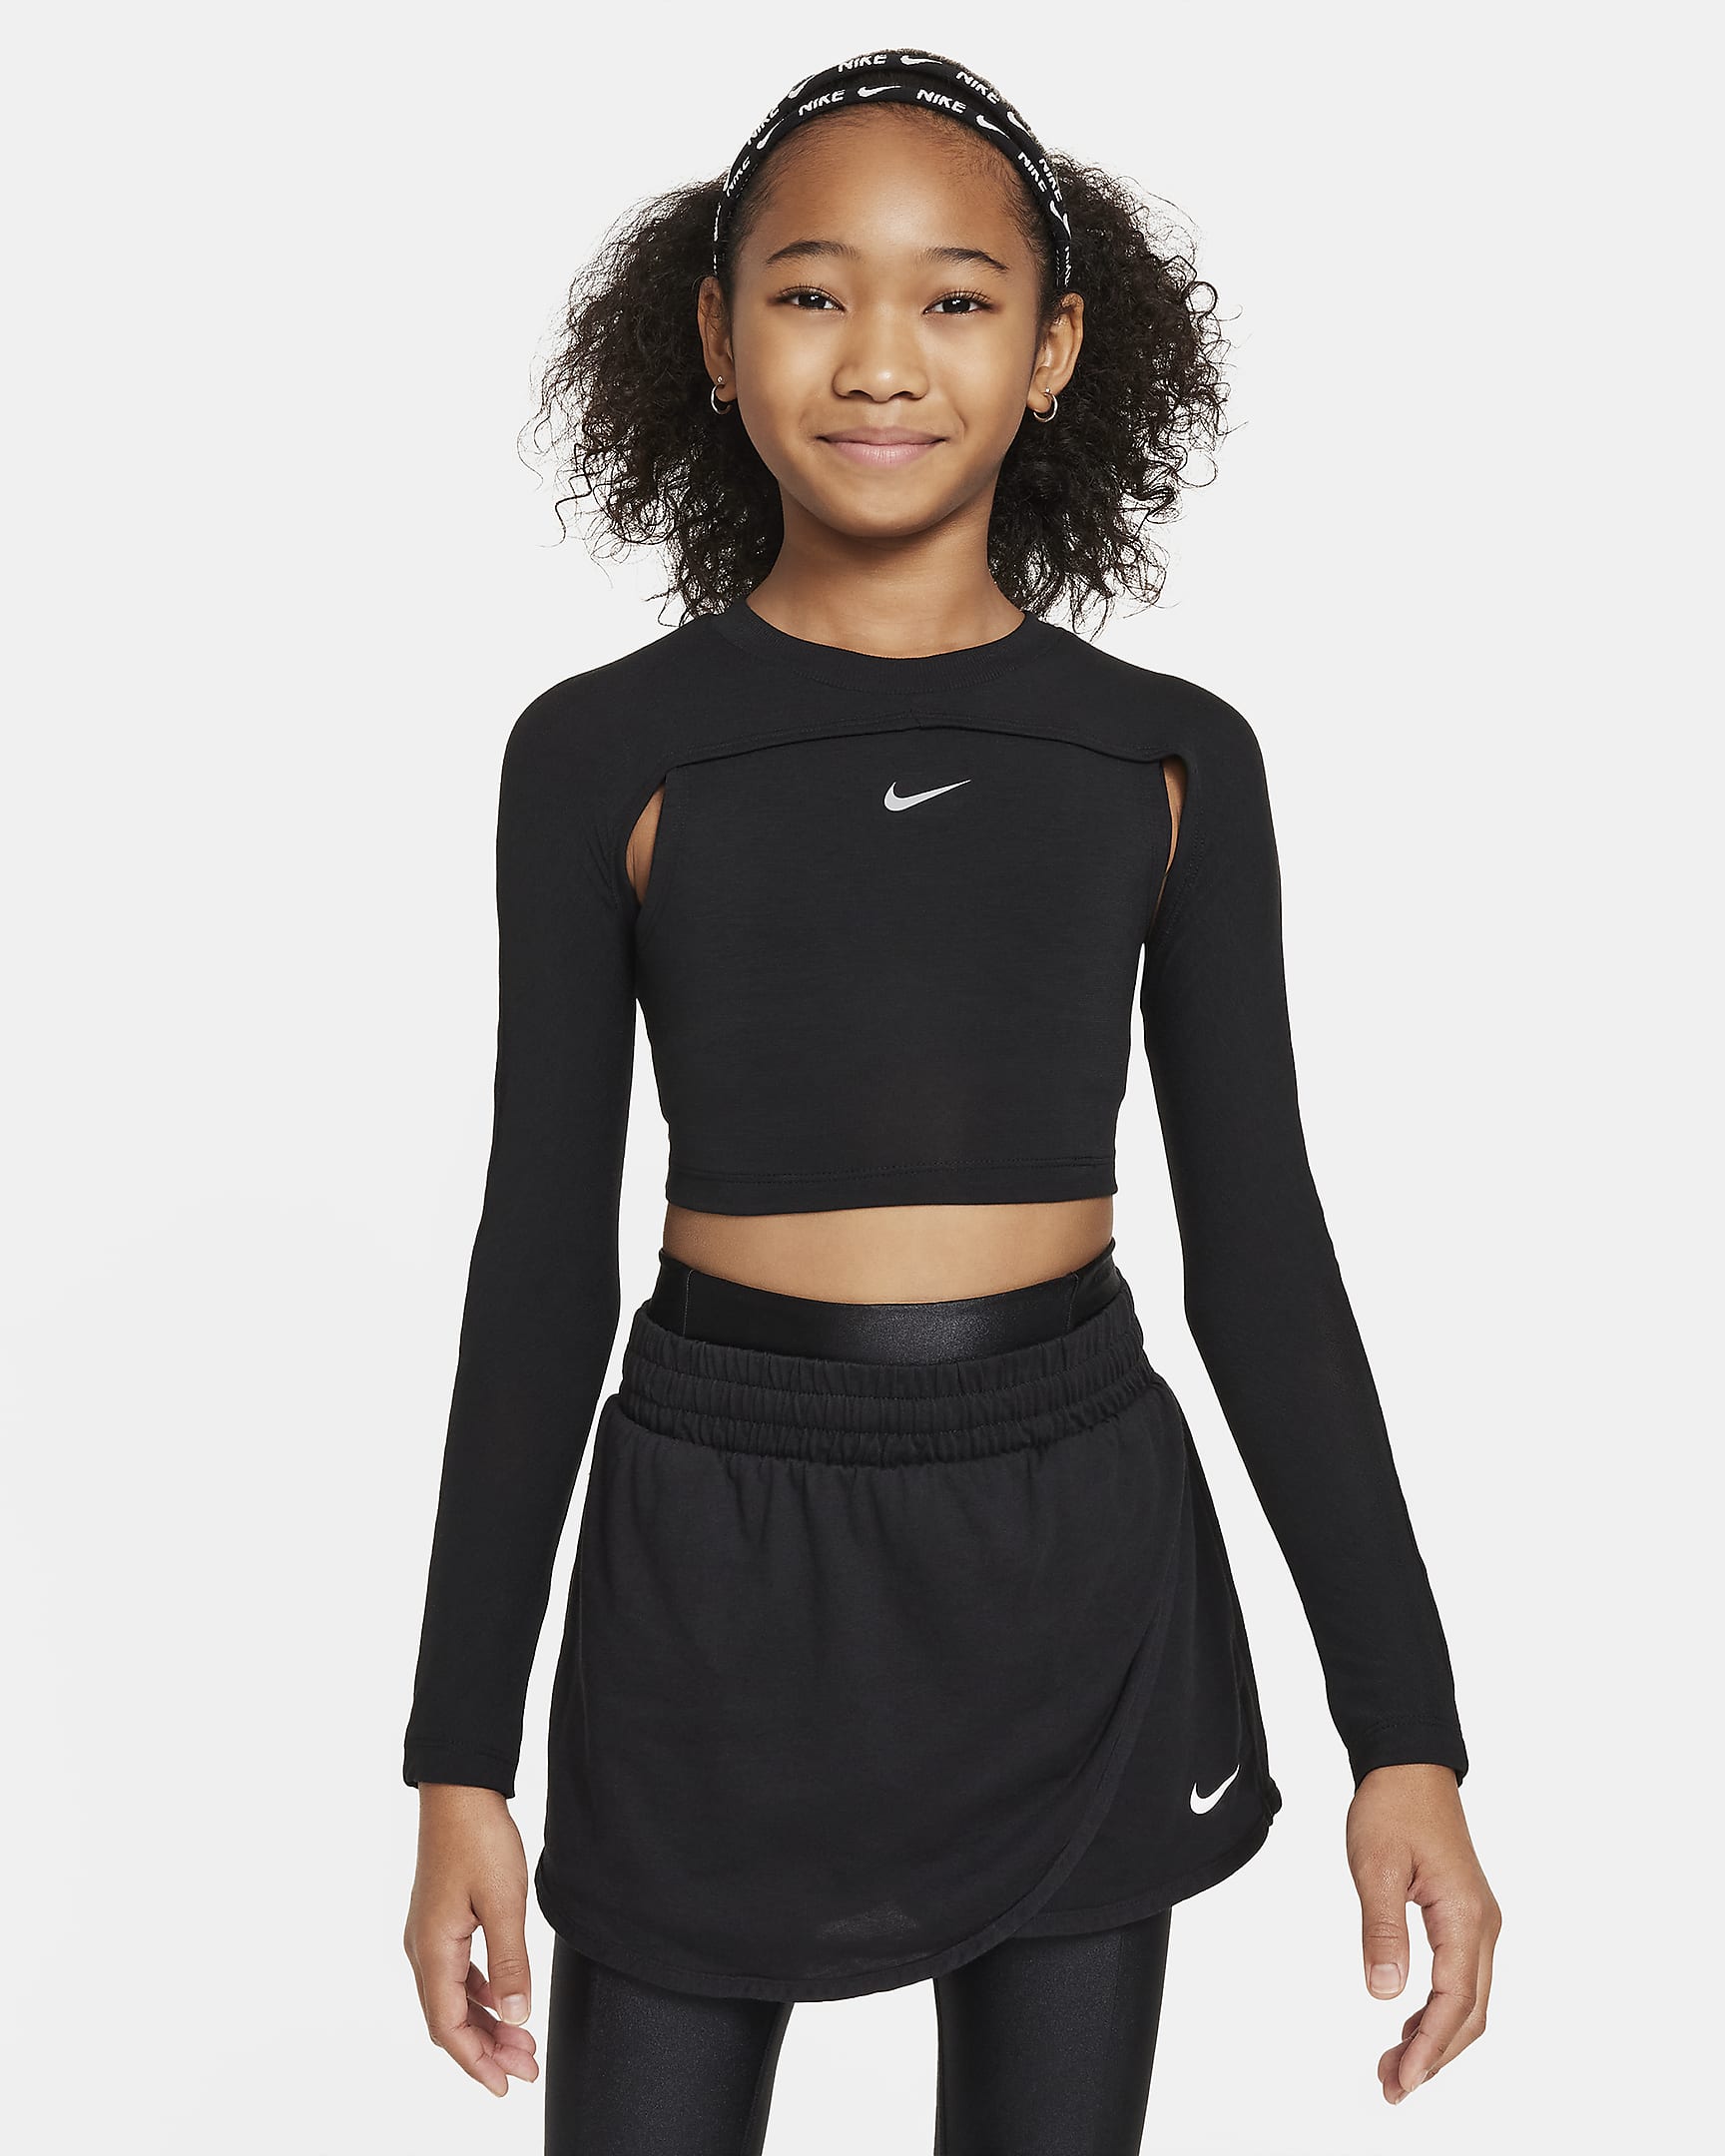 Nike Girls' Dri-FIT Long-Sleeve Top. Nike SG